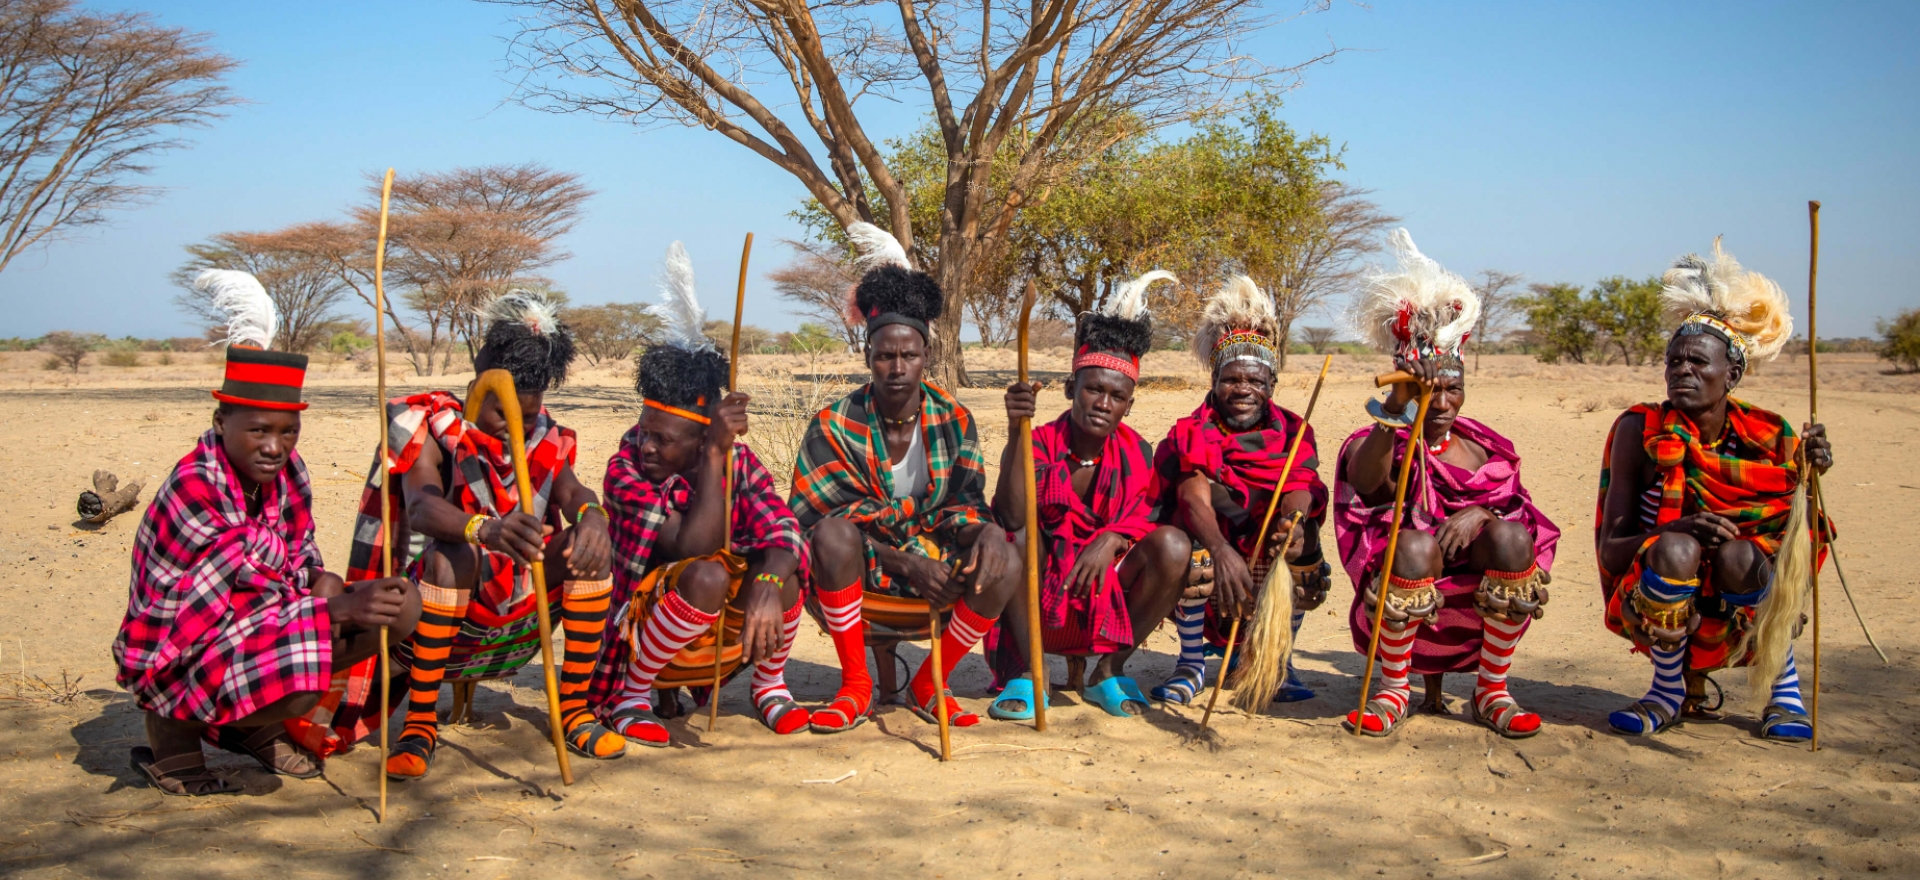 Kmen Turkana, Rudolfovo jezero - Severní Keňa | Planeta lidí